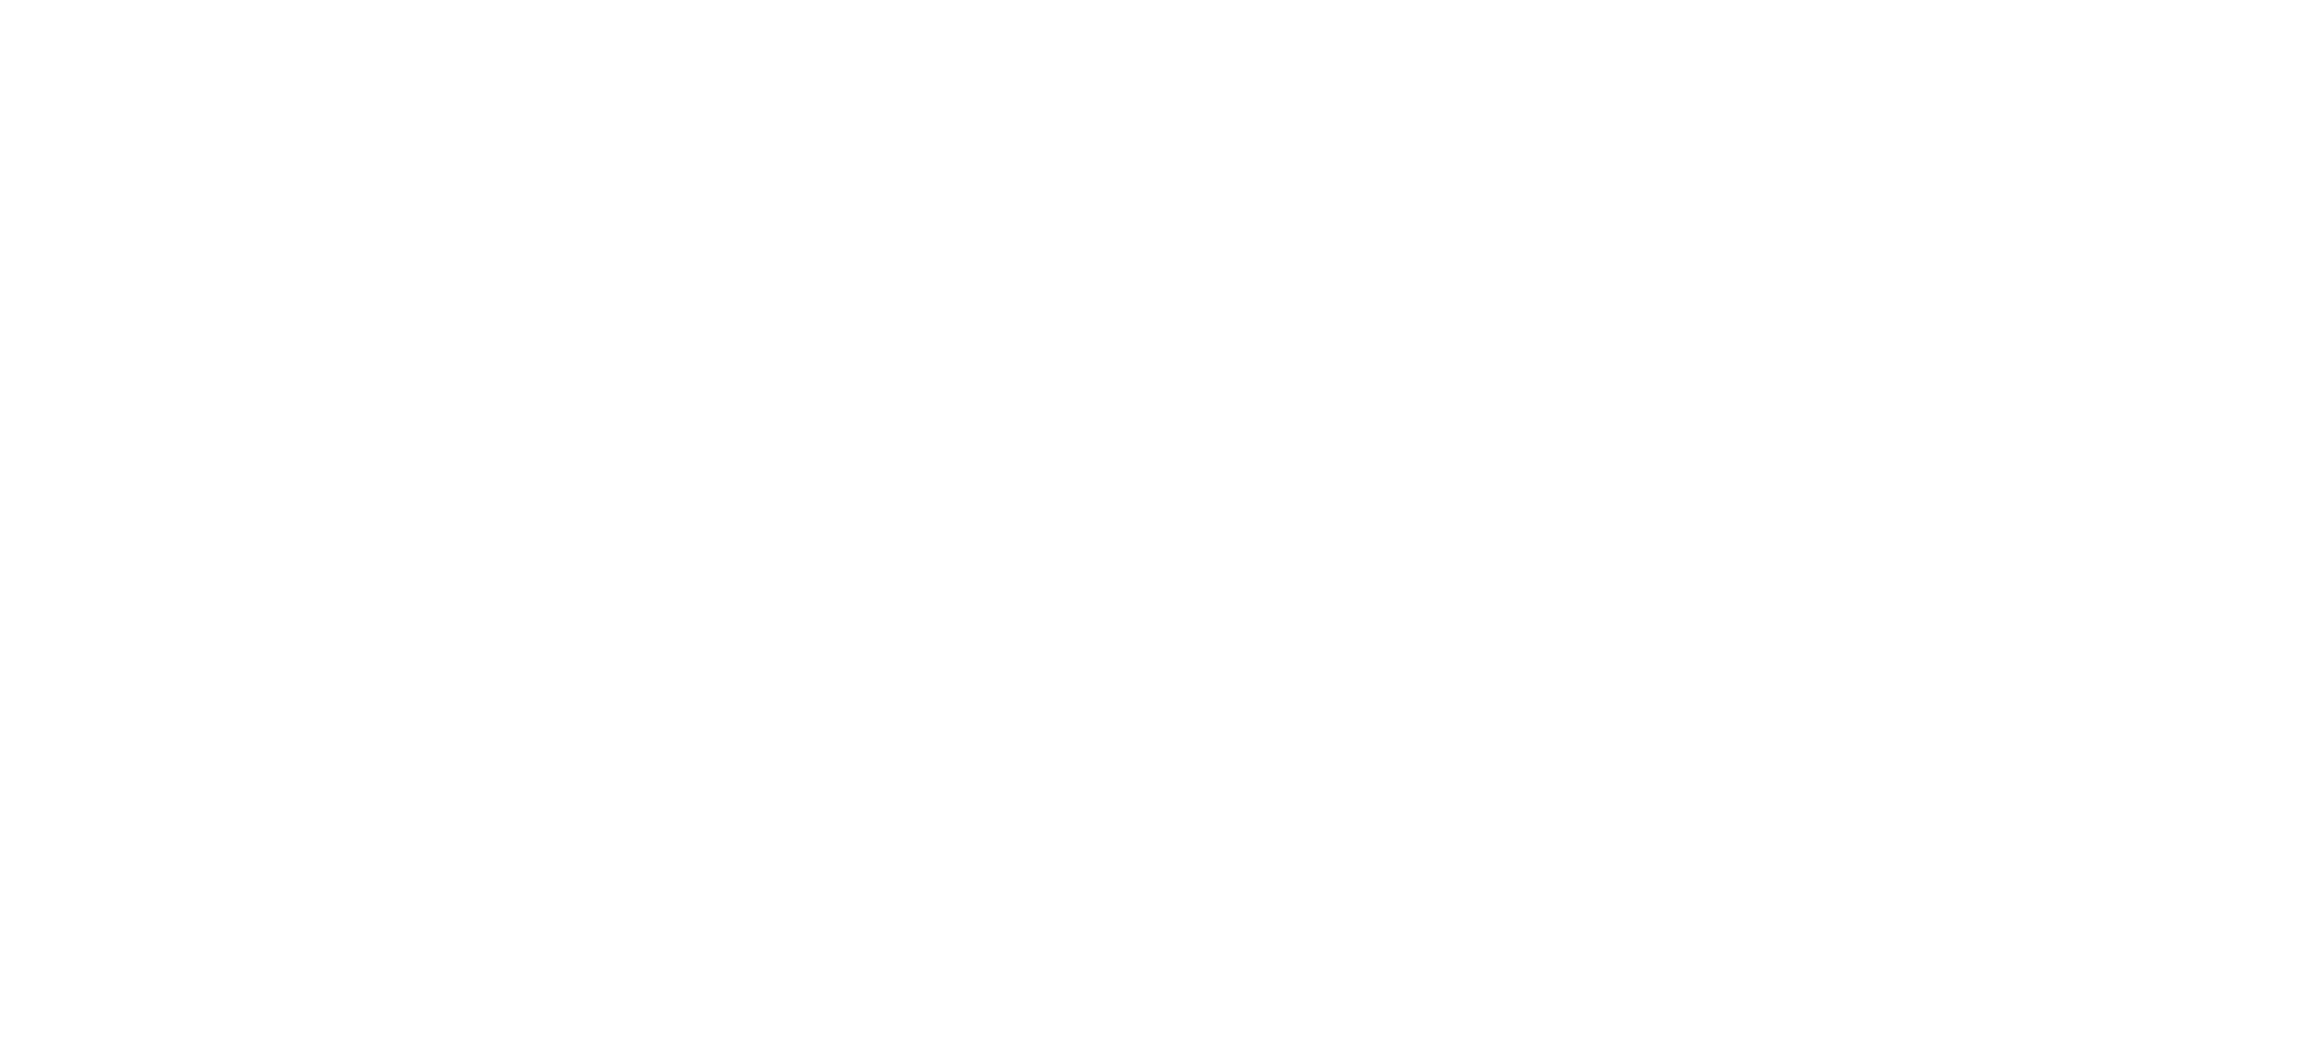 Black Photon